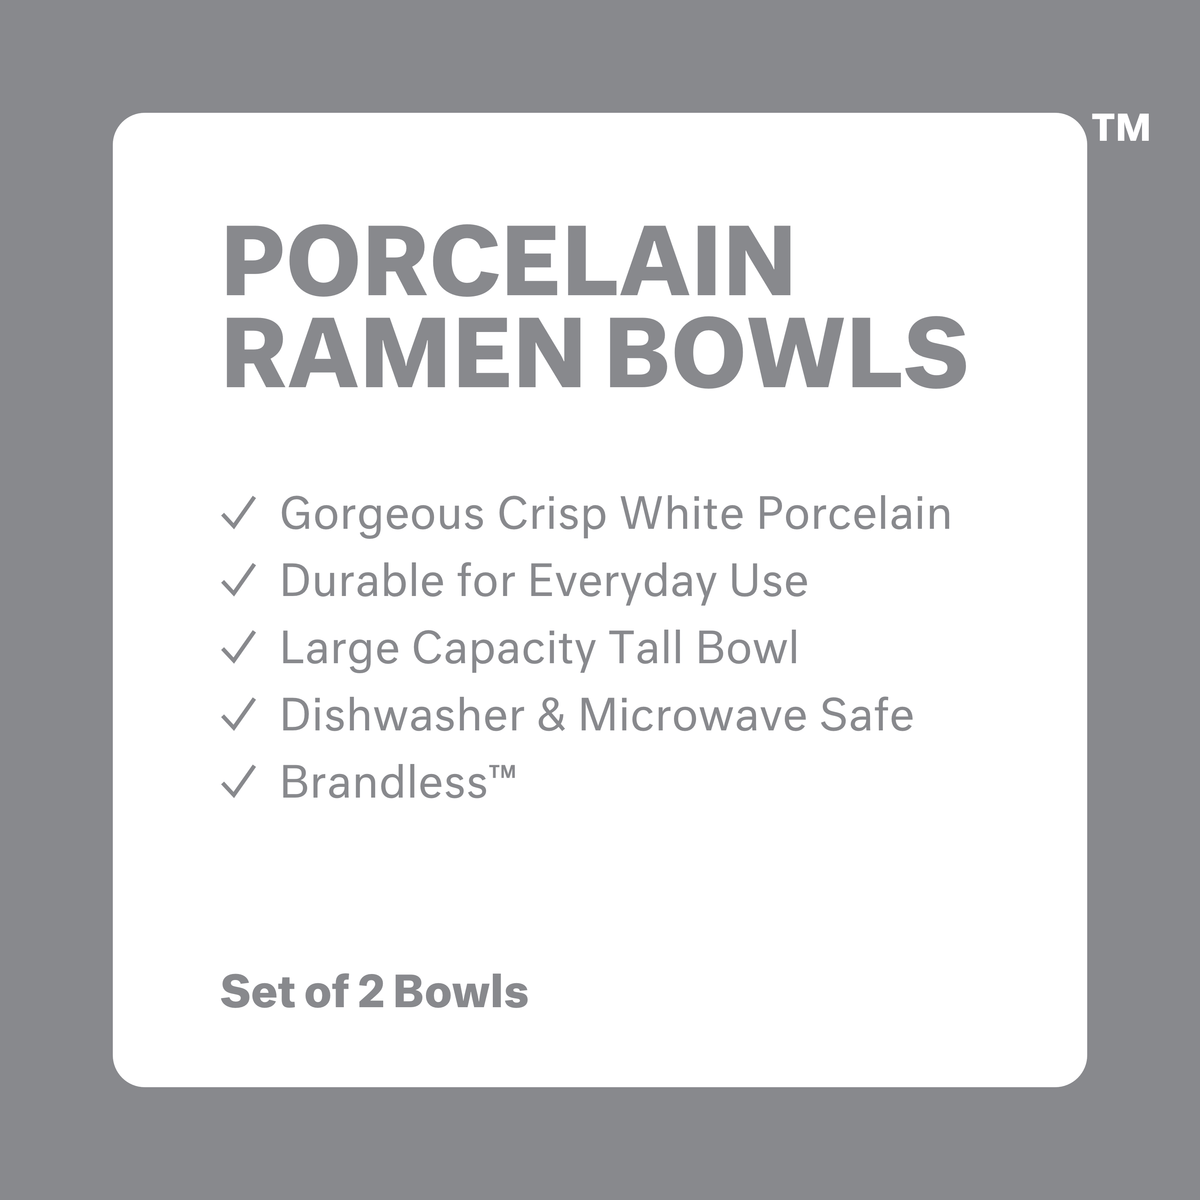 Porcelain Ramen Bowls: gorgeous crisp white porcelain, durable for everyday use, large capacity tall bowl, dishwasher and microwave safe, Brandless. Set of 2 bowls.